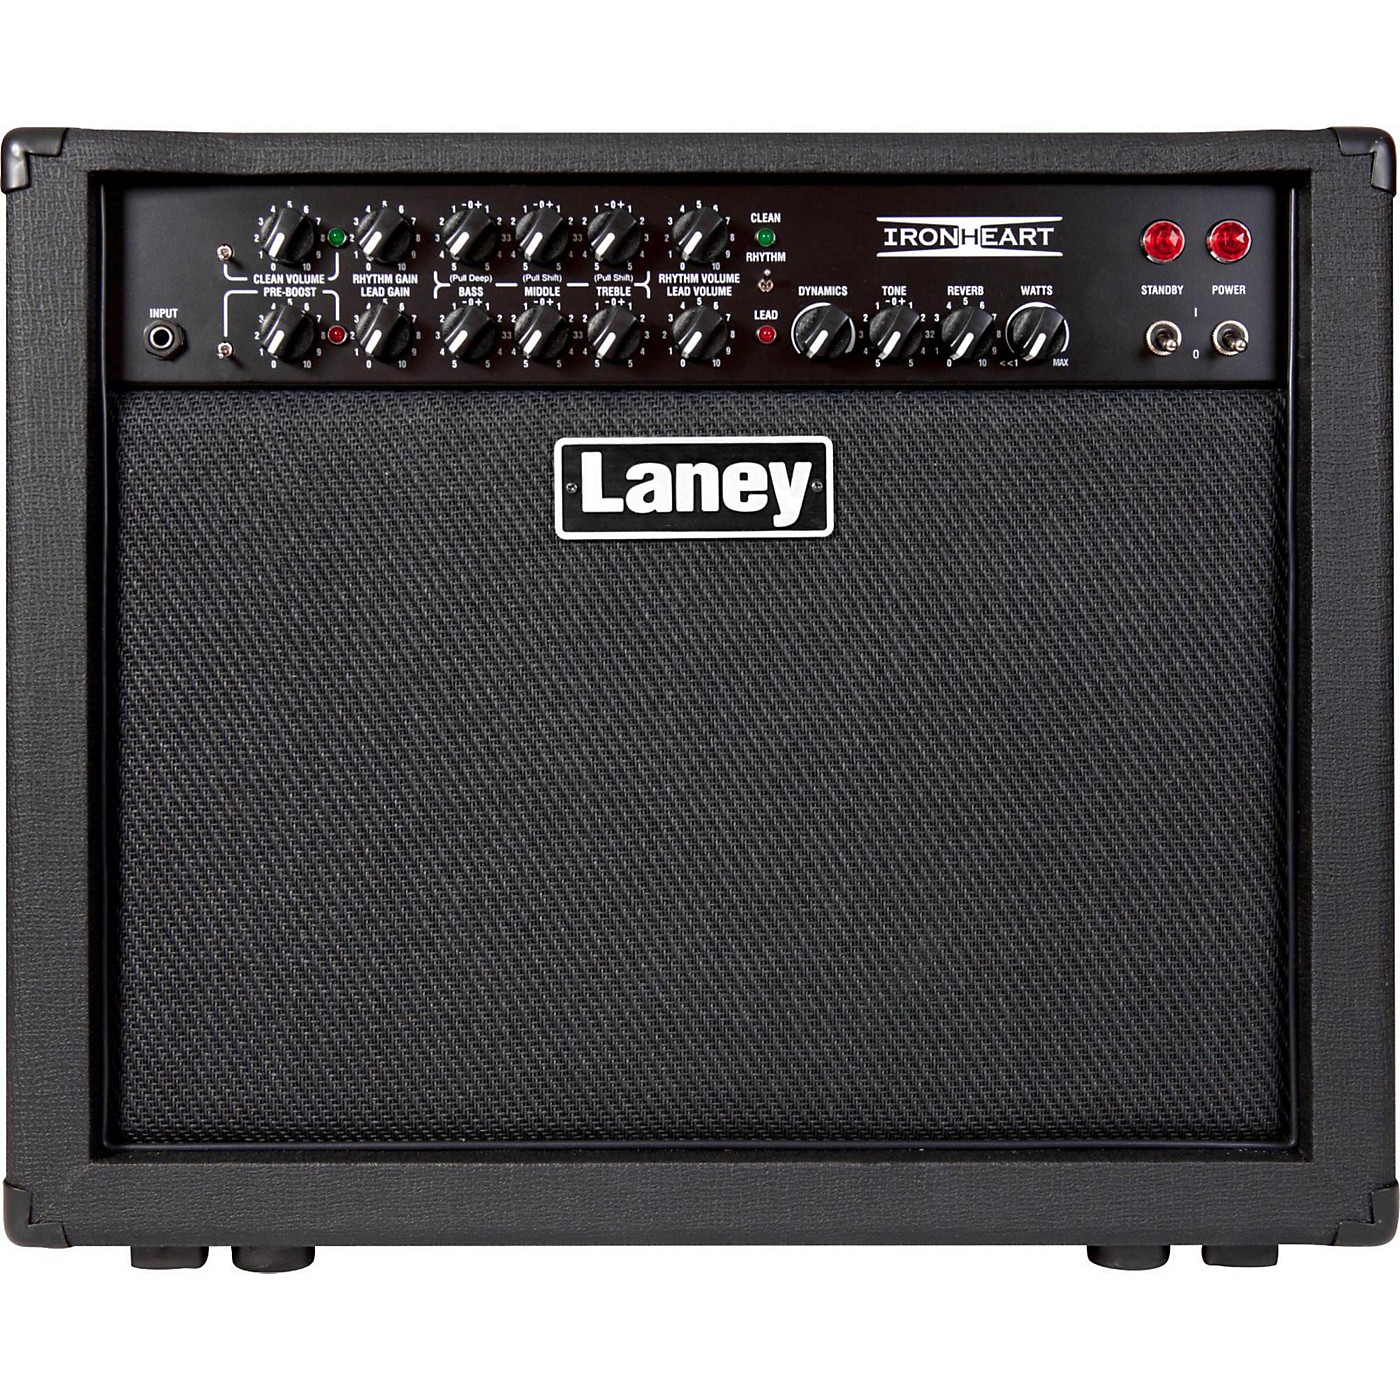 Laney Ironheart All-Tube 30W 1x12 Guitar Combo thumbnail